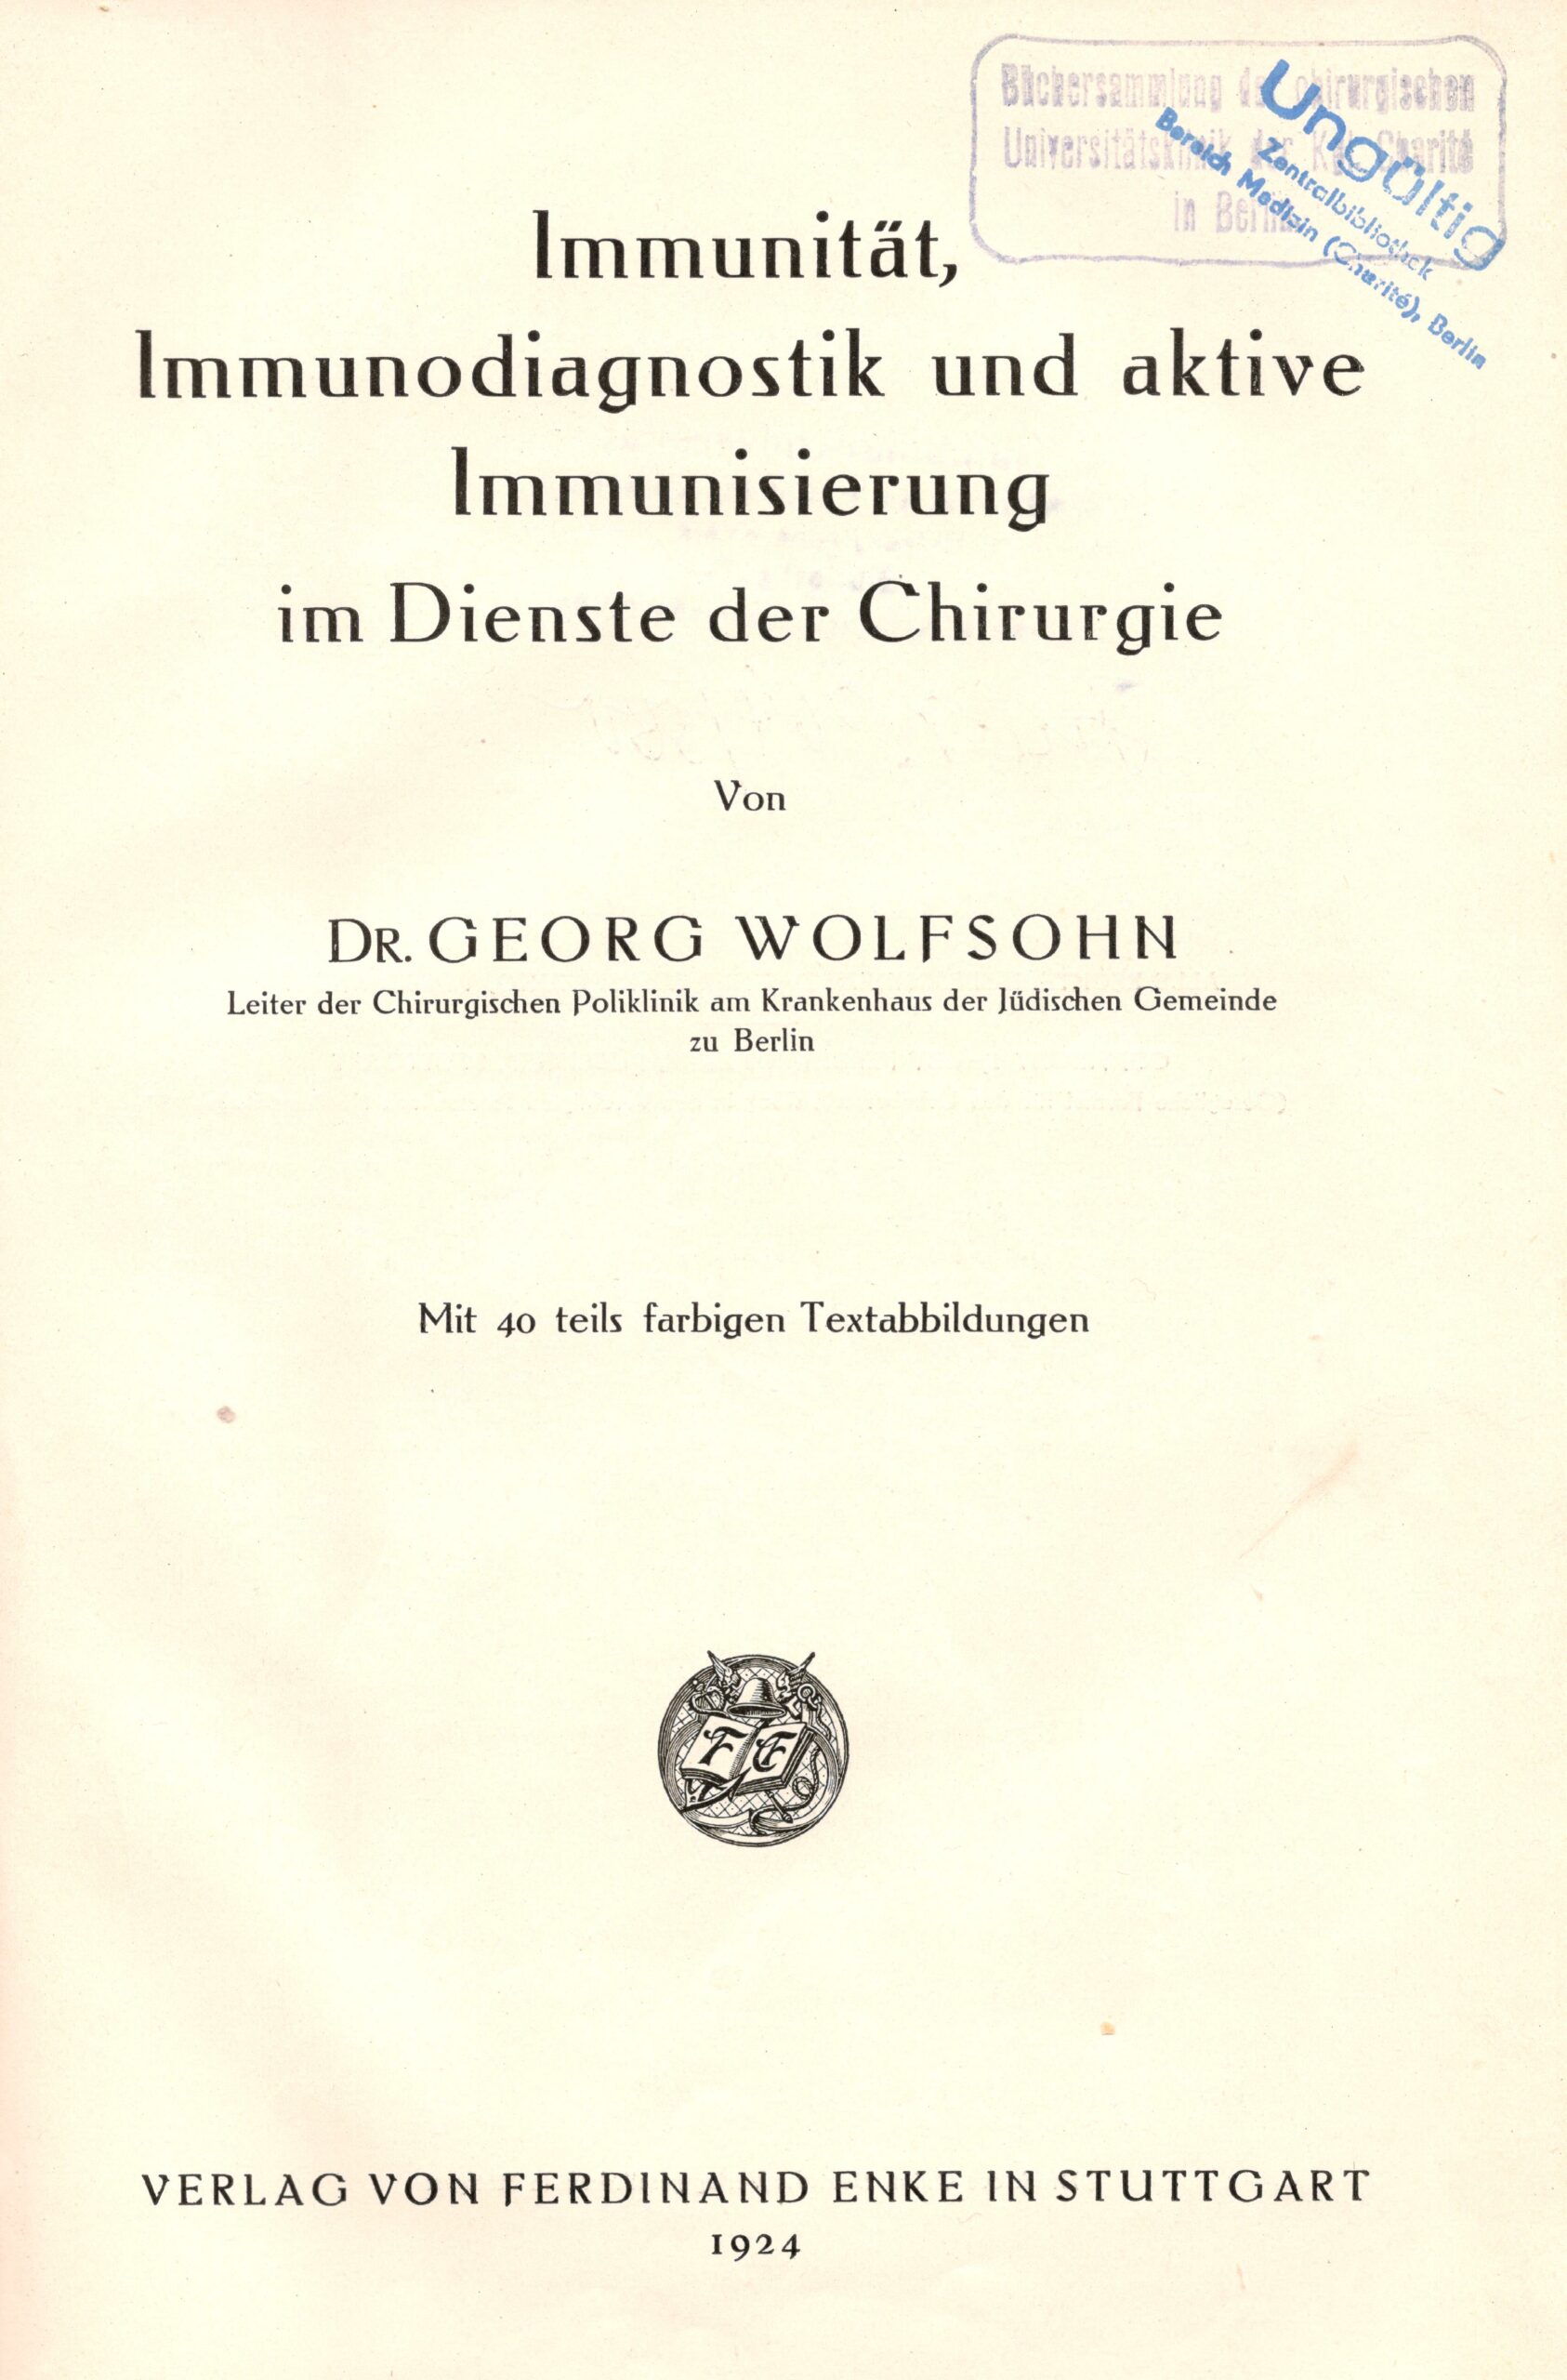 Wolfsohn's book publication 1924, Archive H Je